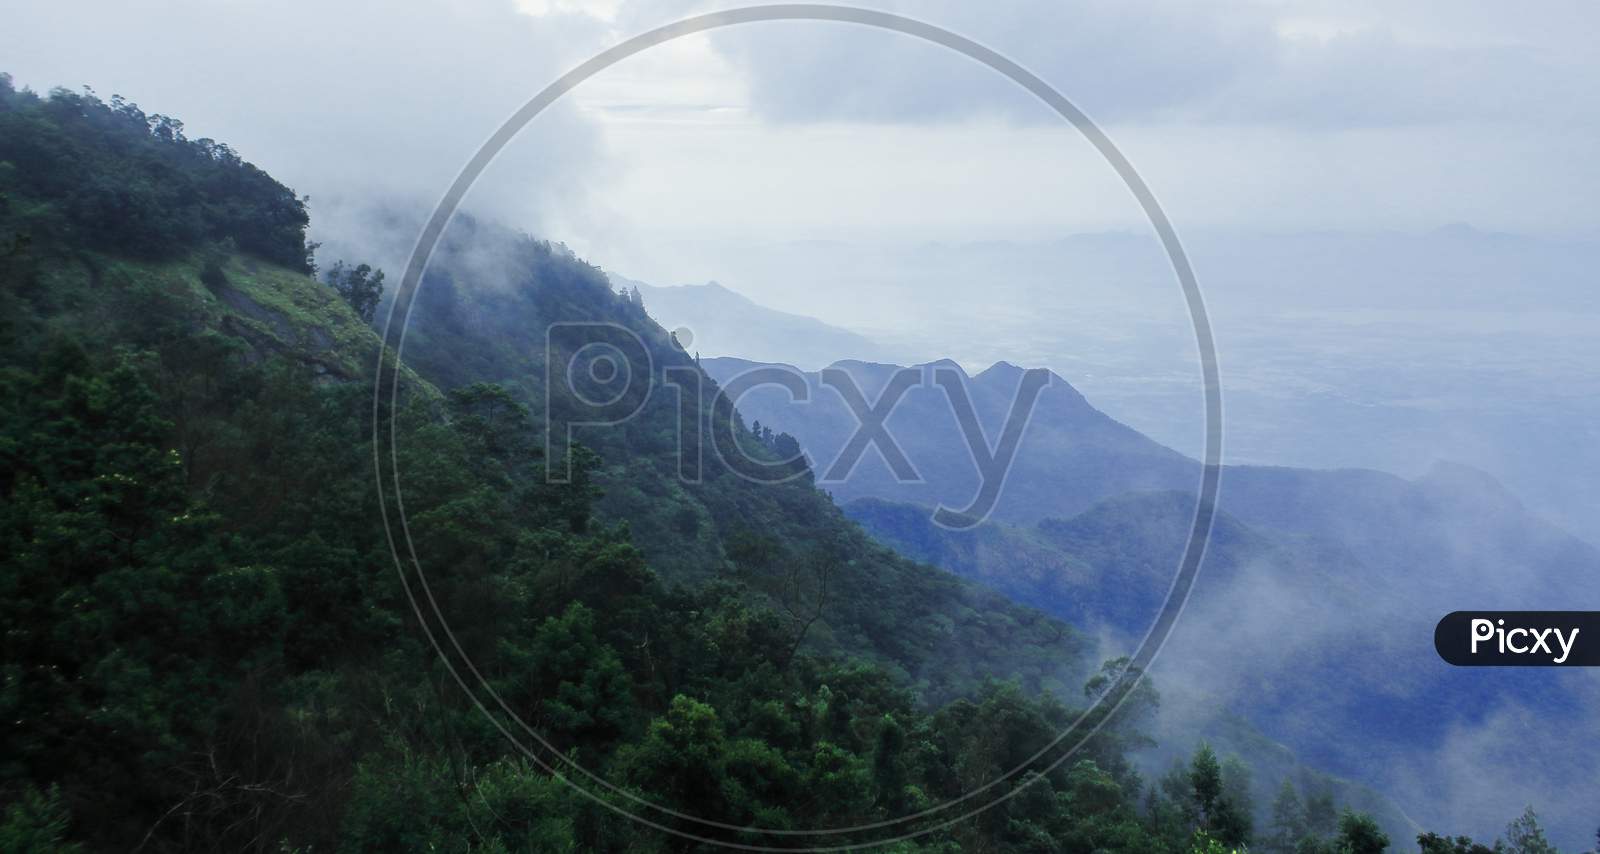 cloudy windward side (relief rainfall) of western ghats mountains in monsoon season